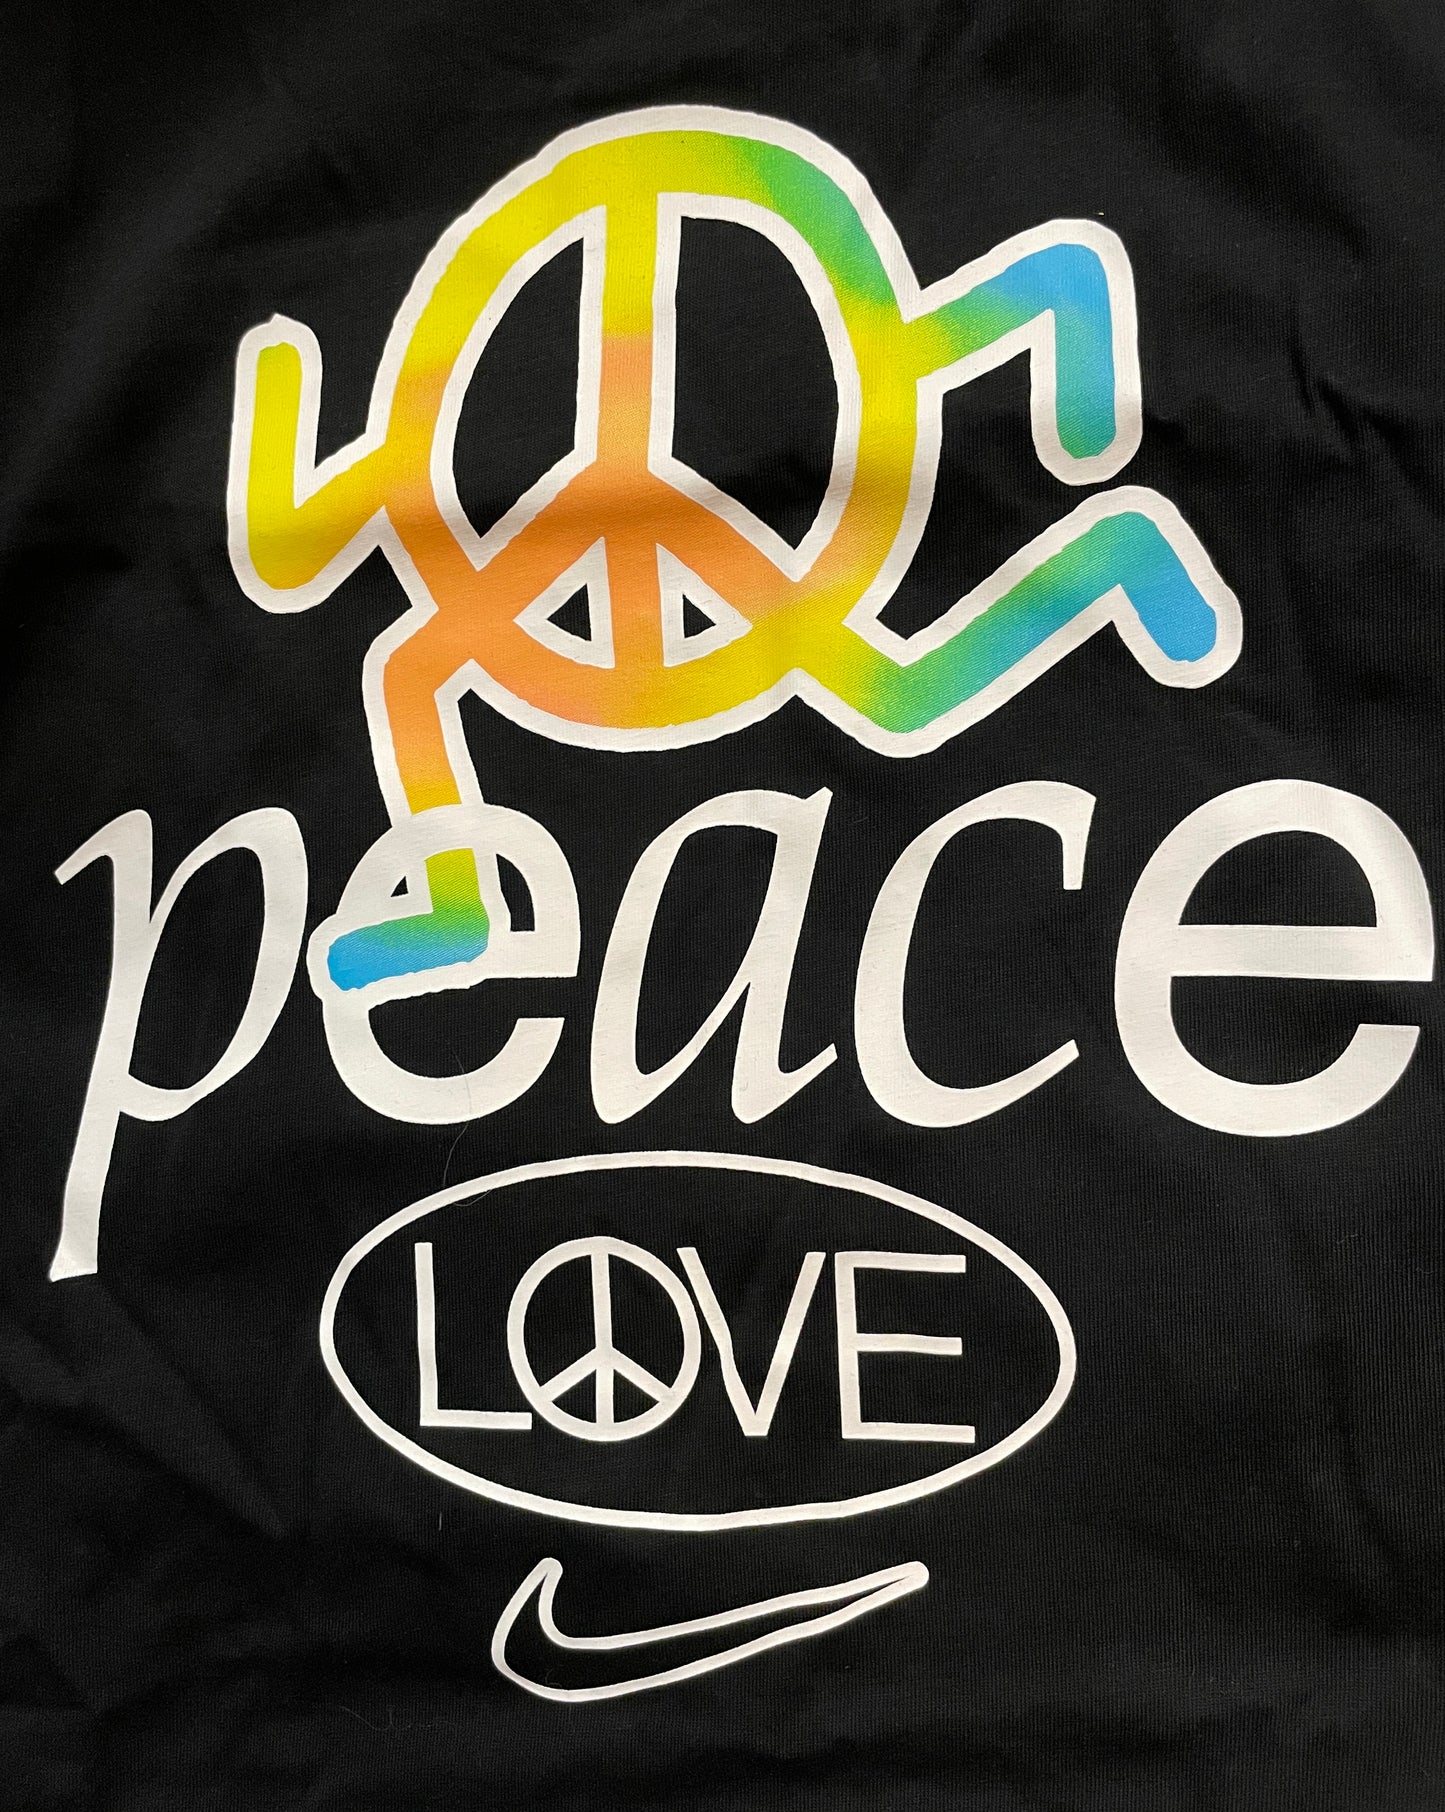 Nike Peace T-Shirt